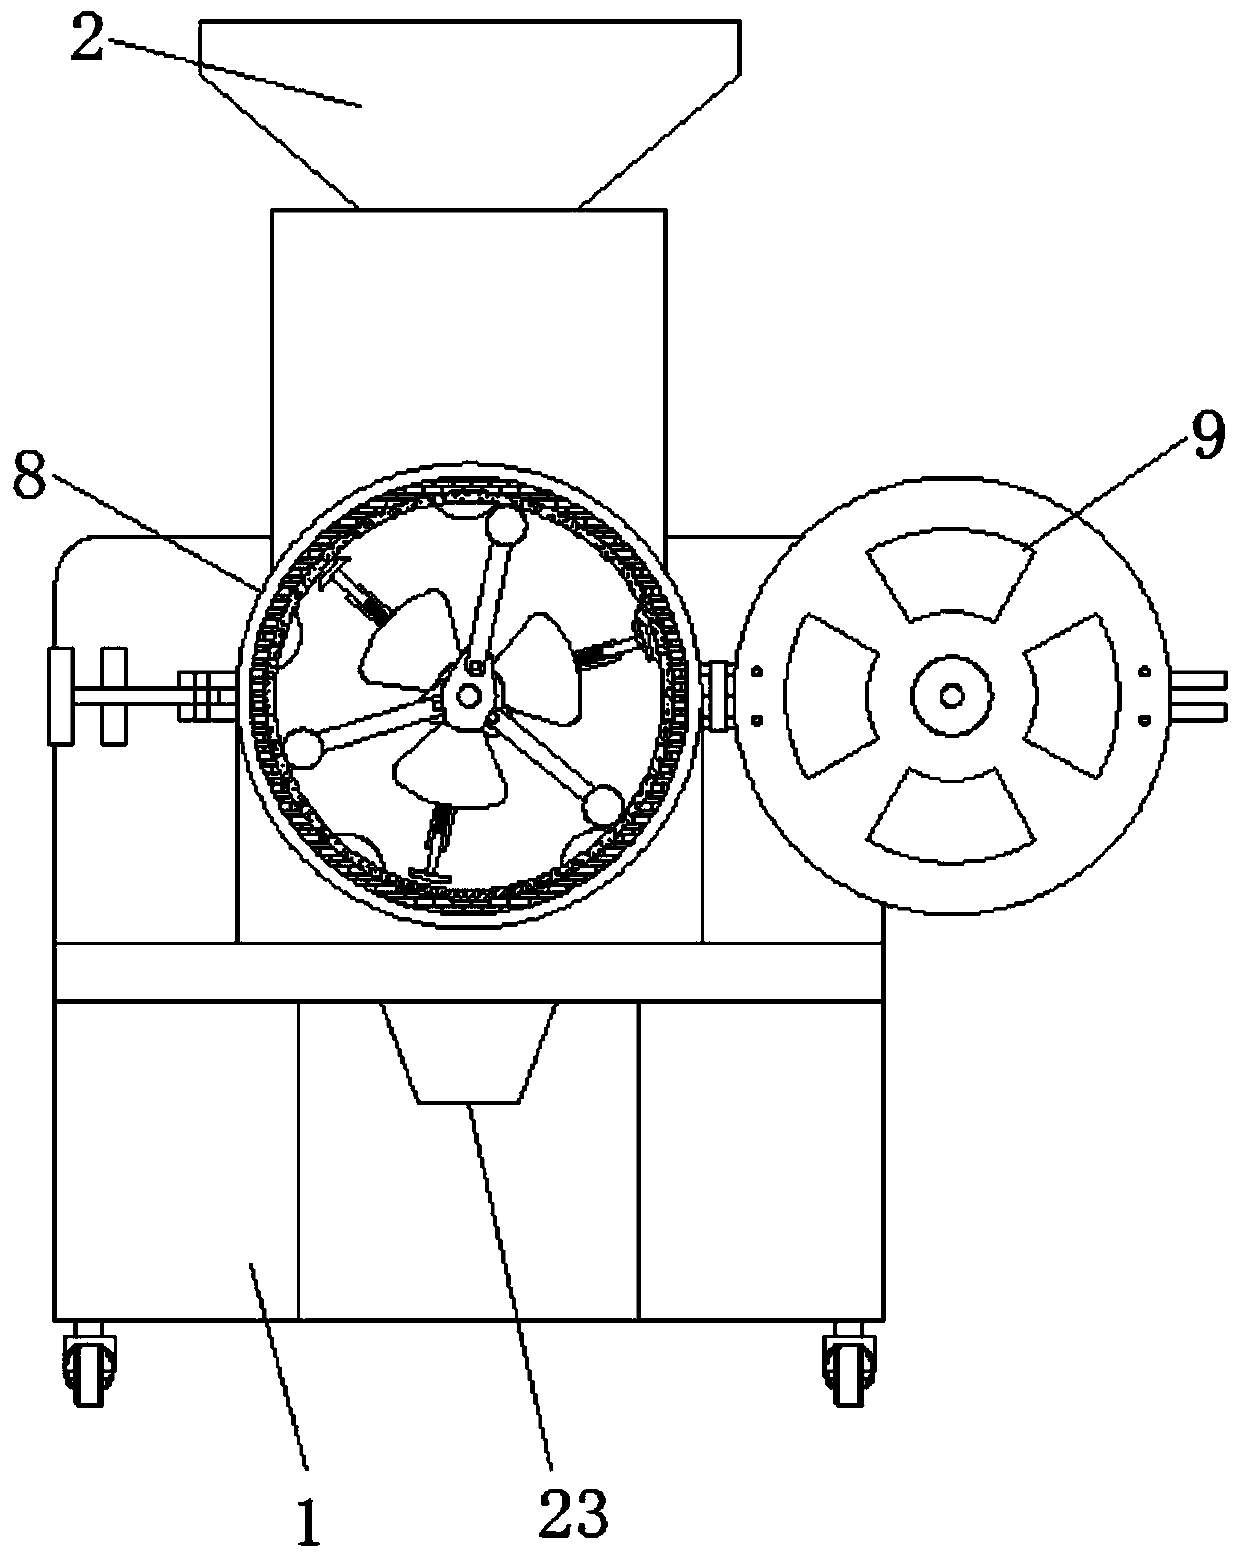 Novel material crushing device using rotational centrifugal force principle